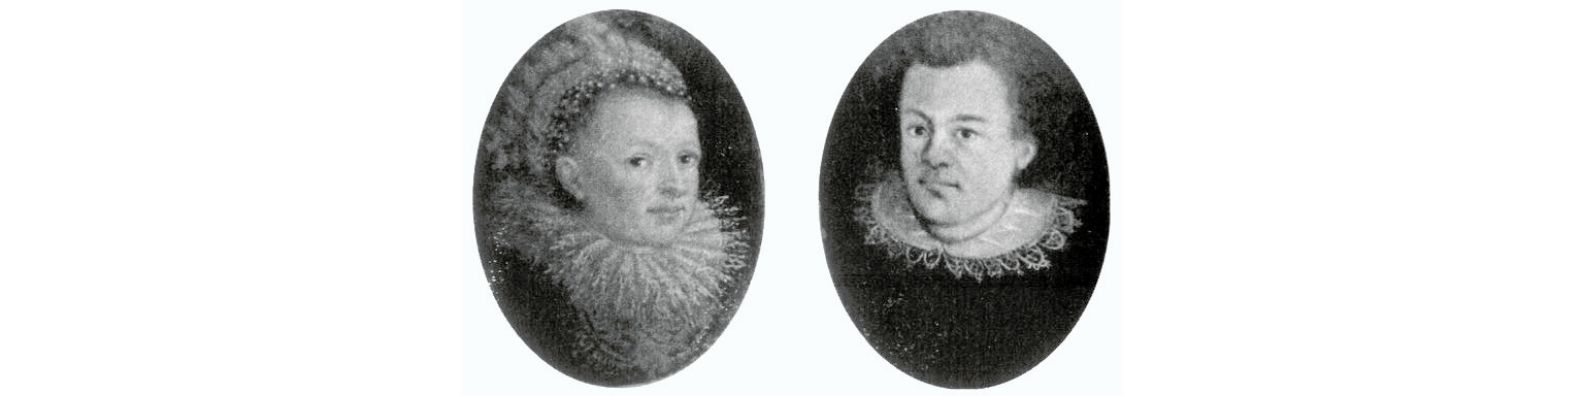 Potret Johannes Keppler dan Barbara Müller (Foto: Public Domain)